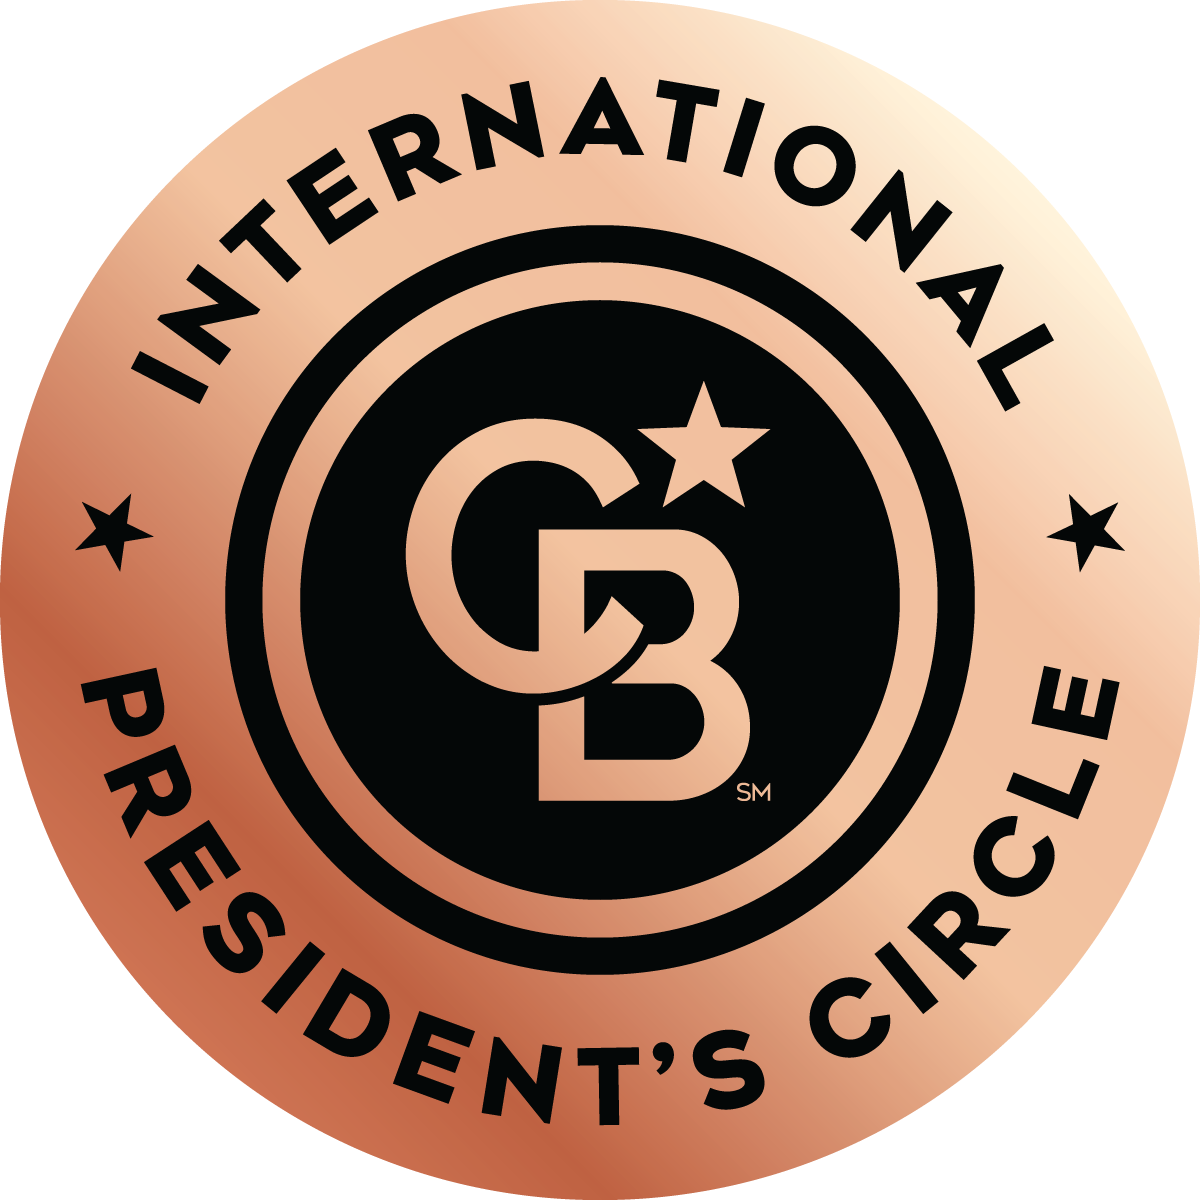 Presidents circle